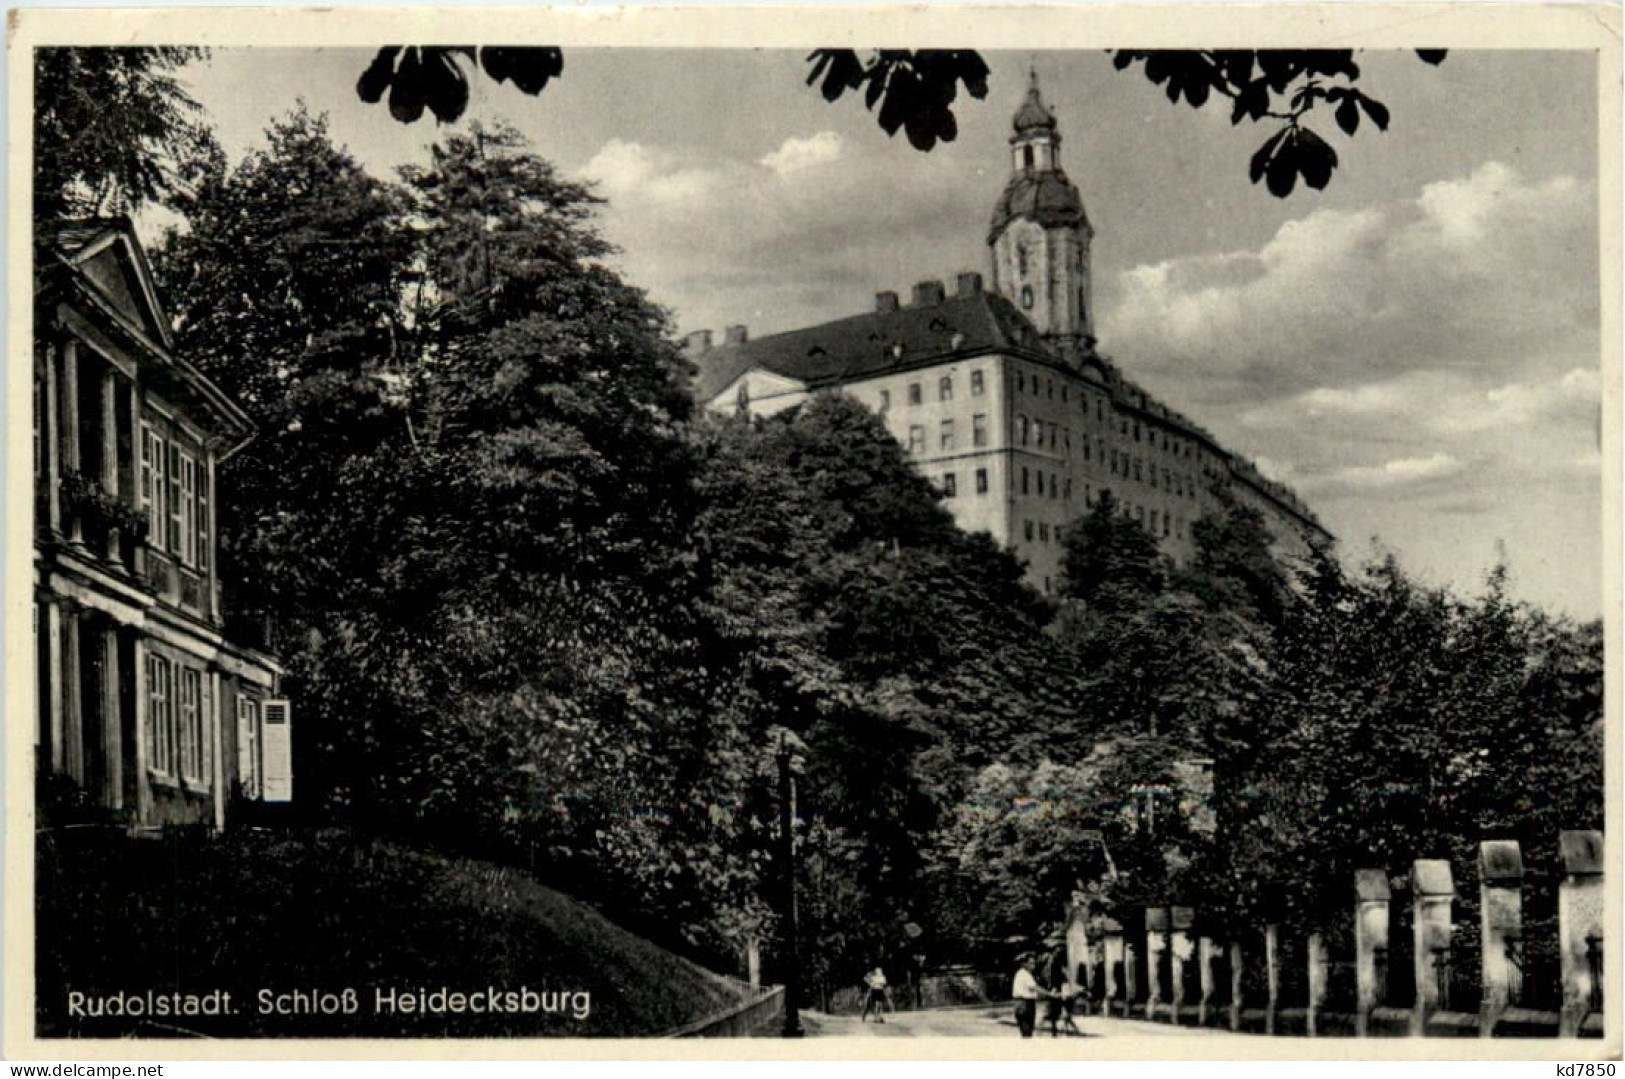 Rudolstadt, Schloss Heidecksburg - Rudolstadt